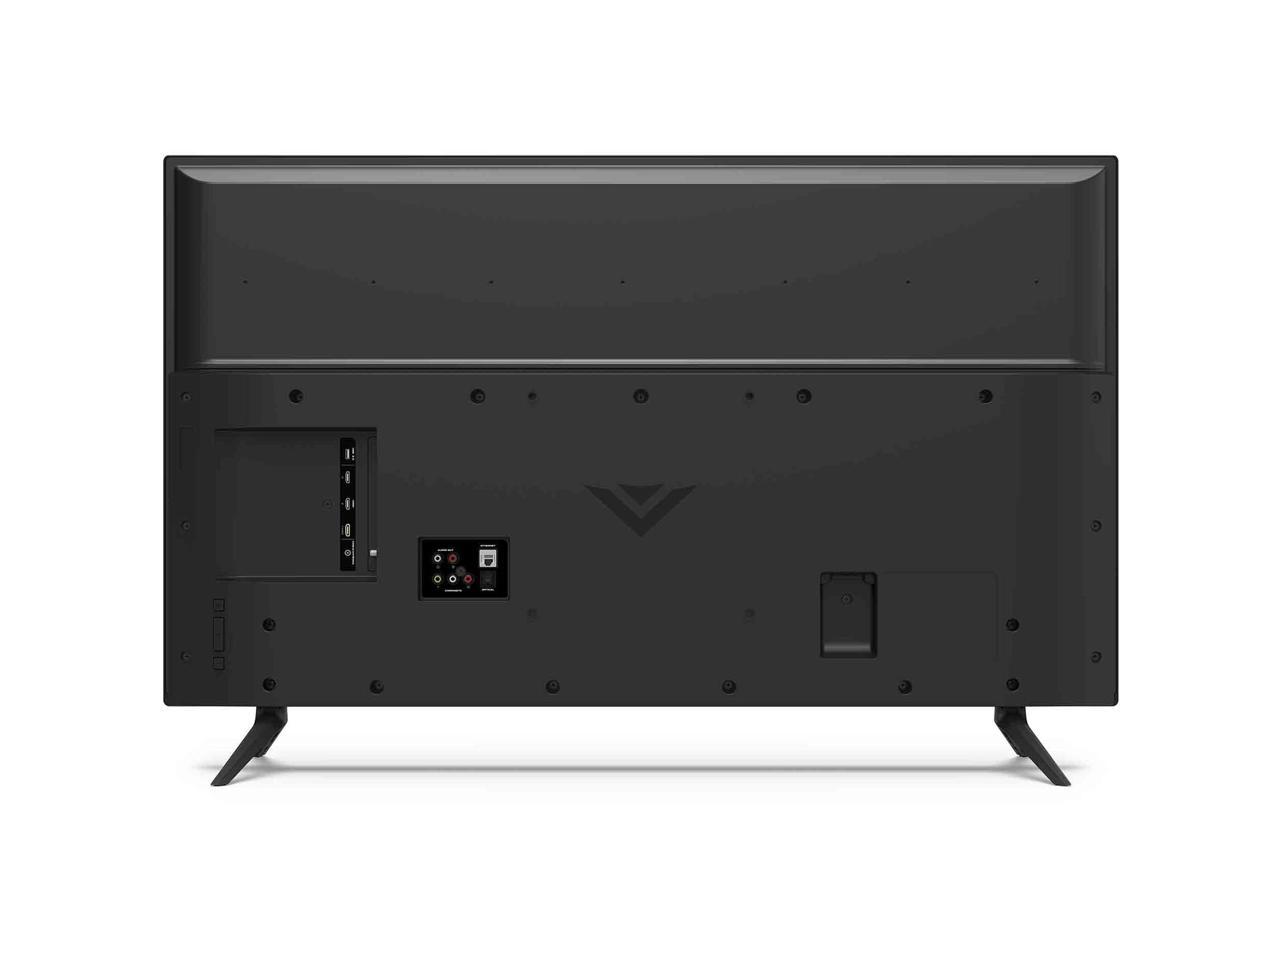 Vizio V Series 40 Inch 2160p 4k Uhd Led Smart Tv V405 G9 With Built